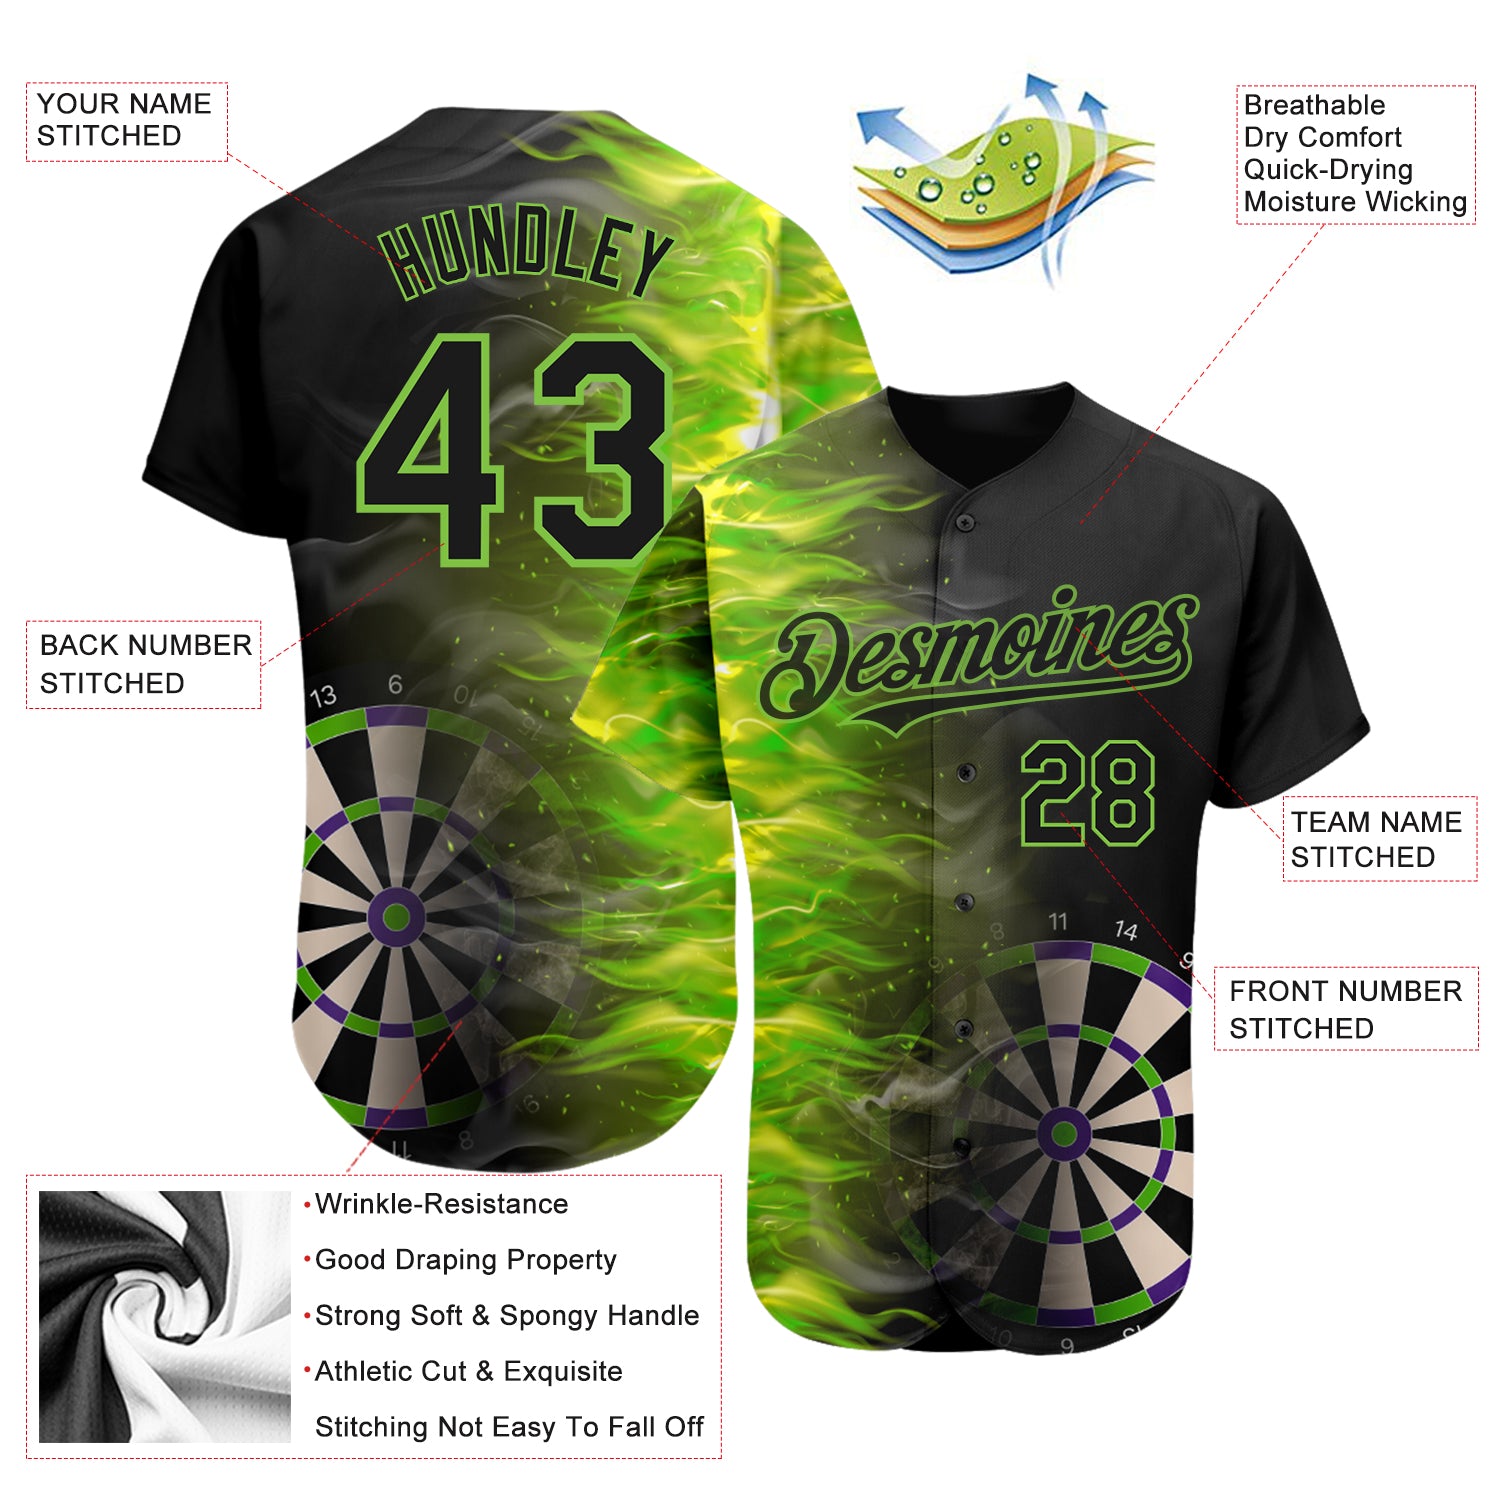 Custom 3D Patterns Darts T-Shirts | Performance Retro Jerseys Design ...